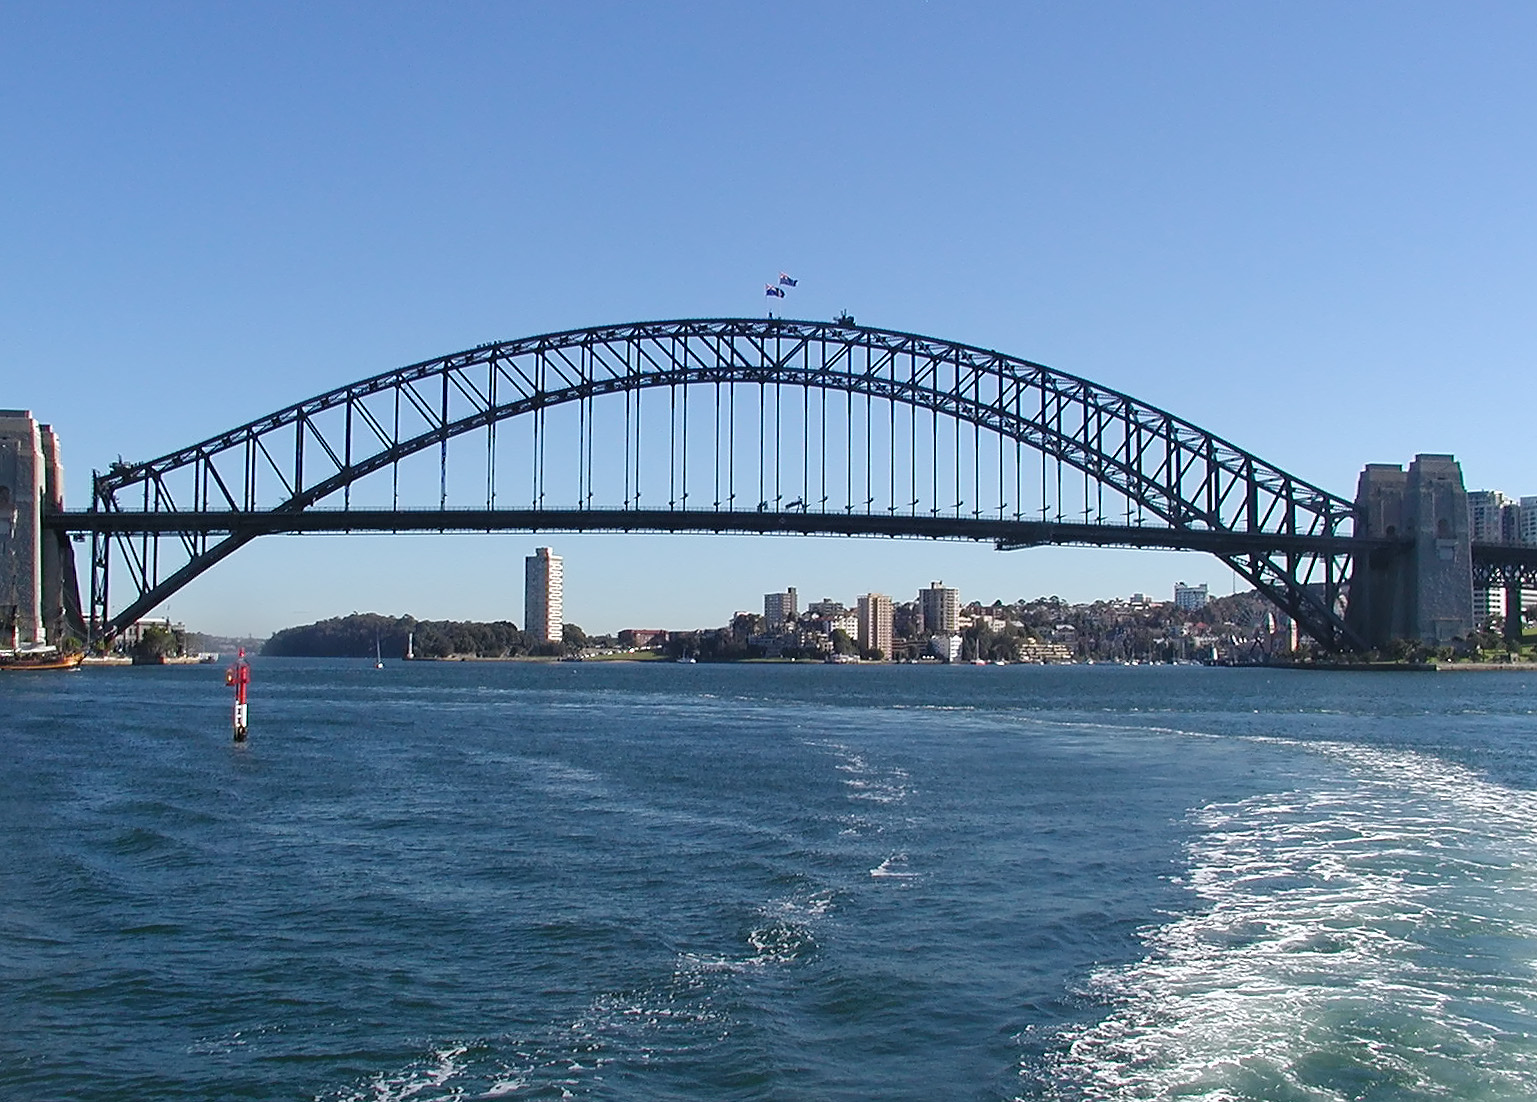 17-Jun-2001 10:09 - Sydney - The Harbour Bridge